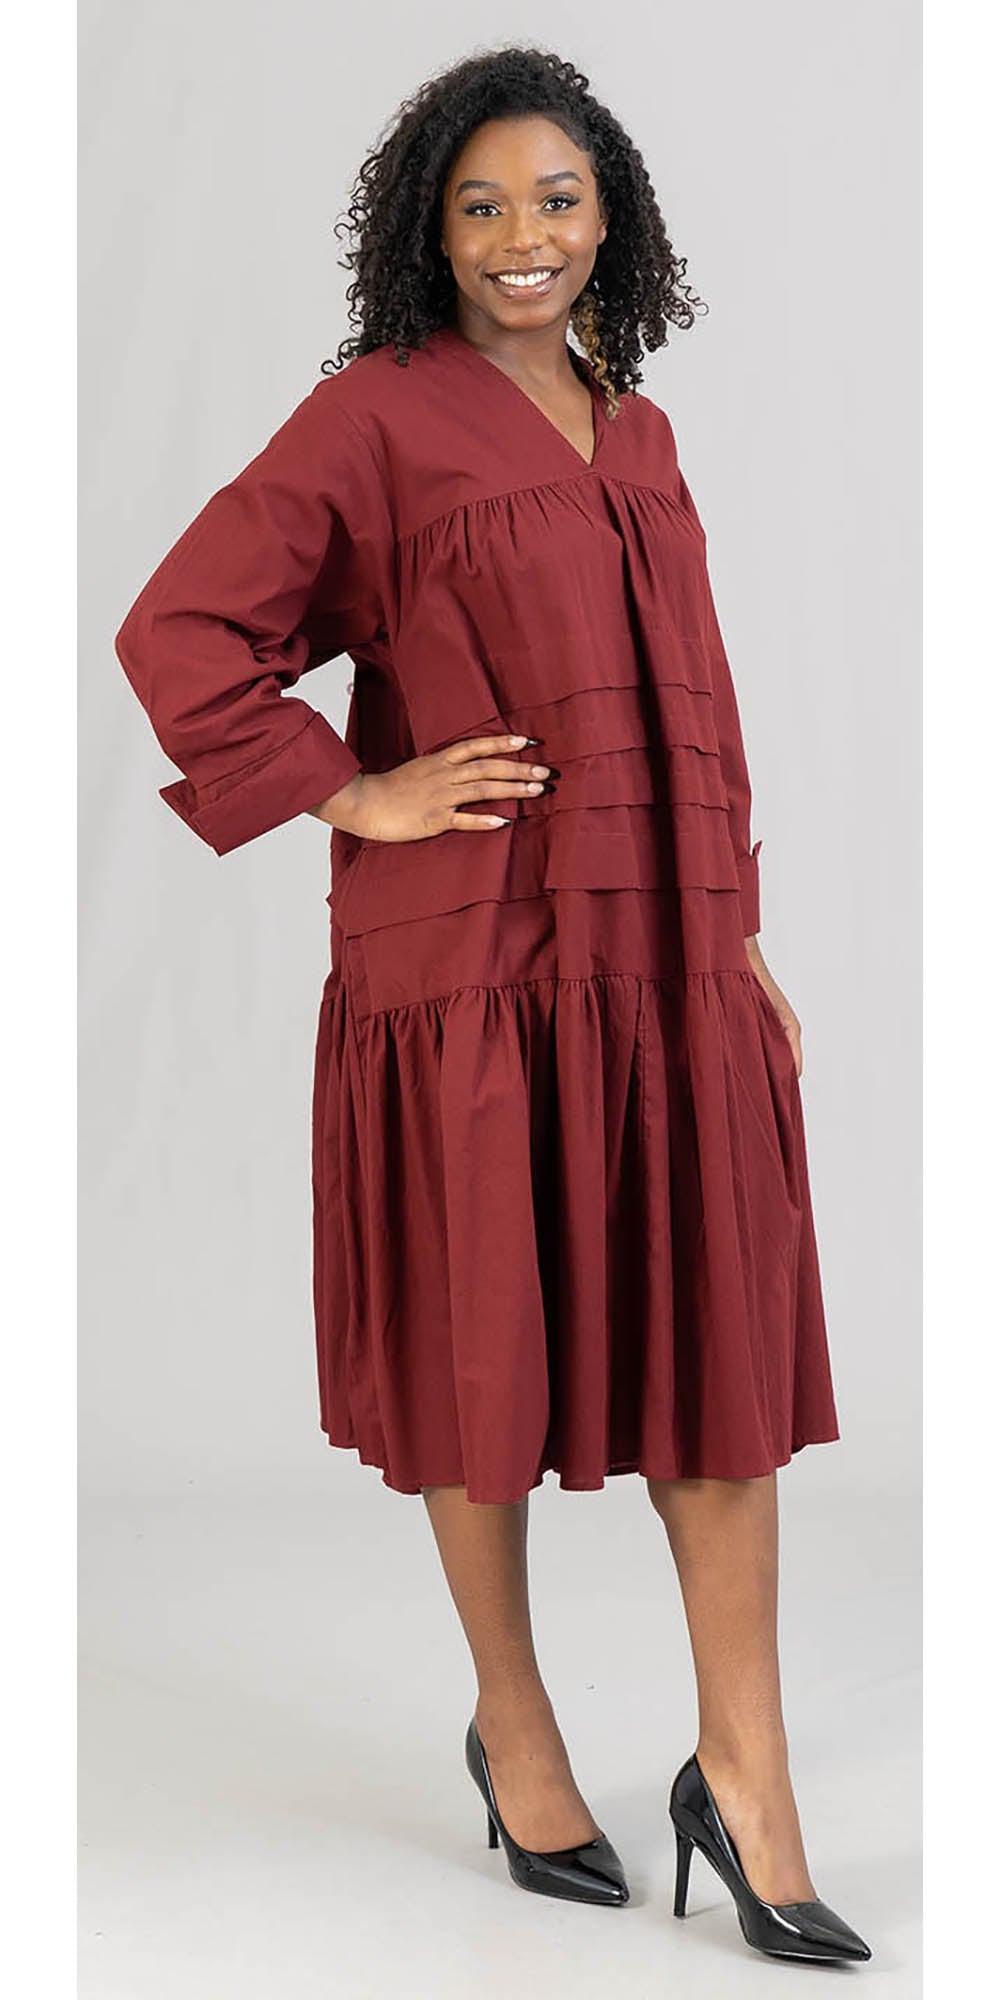 KaraChic 7580S - Burgundy - Womens Cuff-Sleeve Tiered Tunic Dress